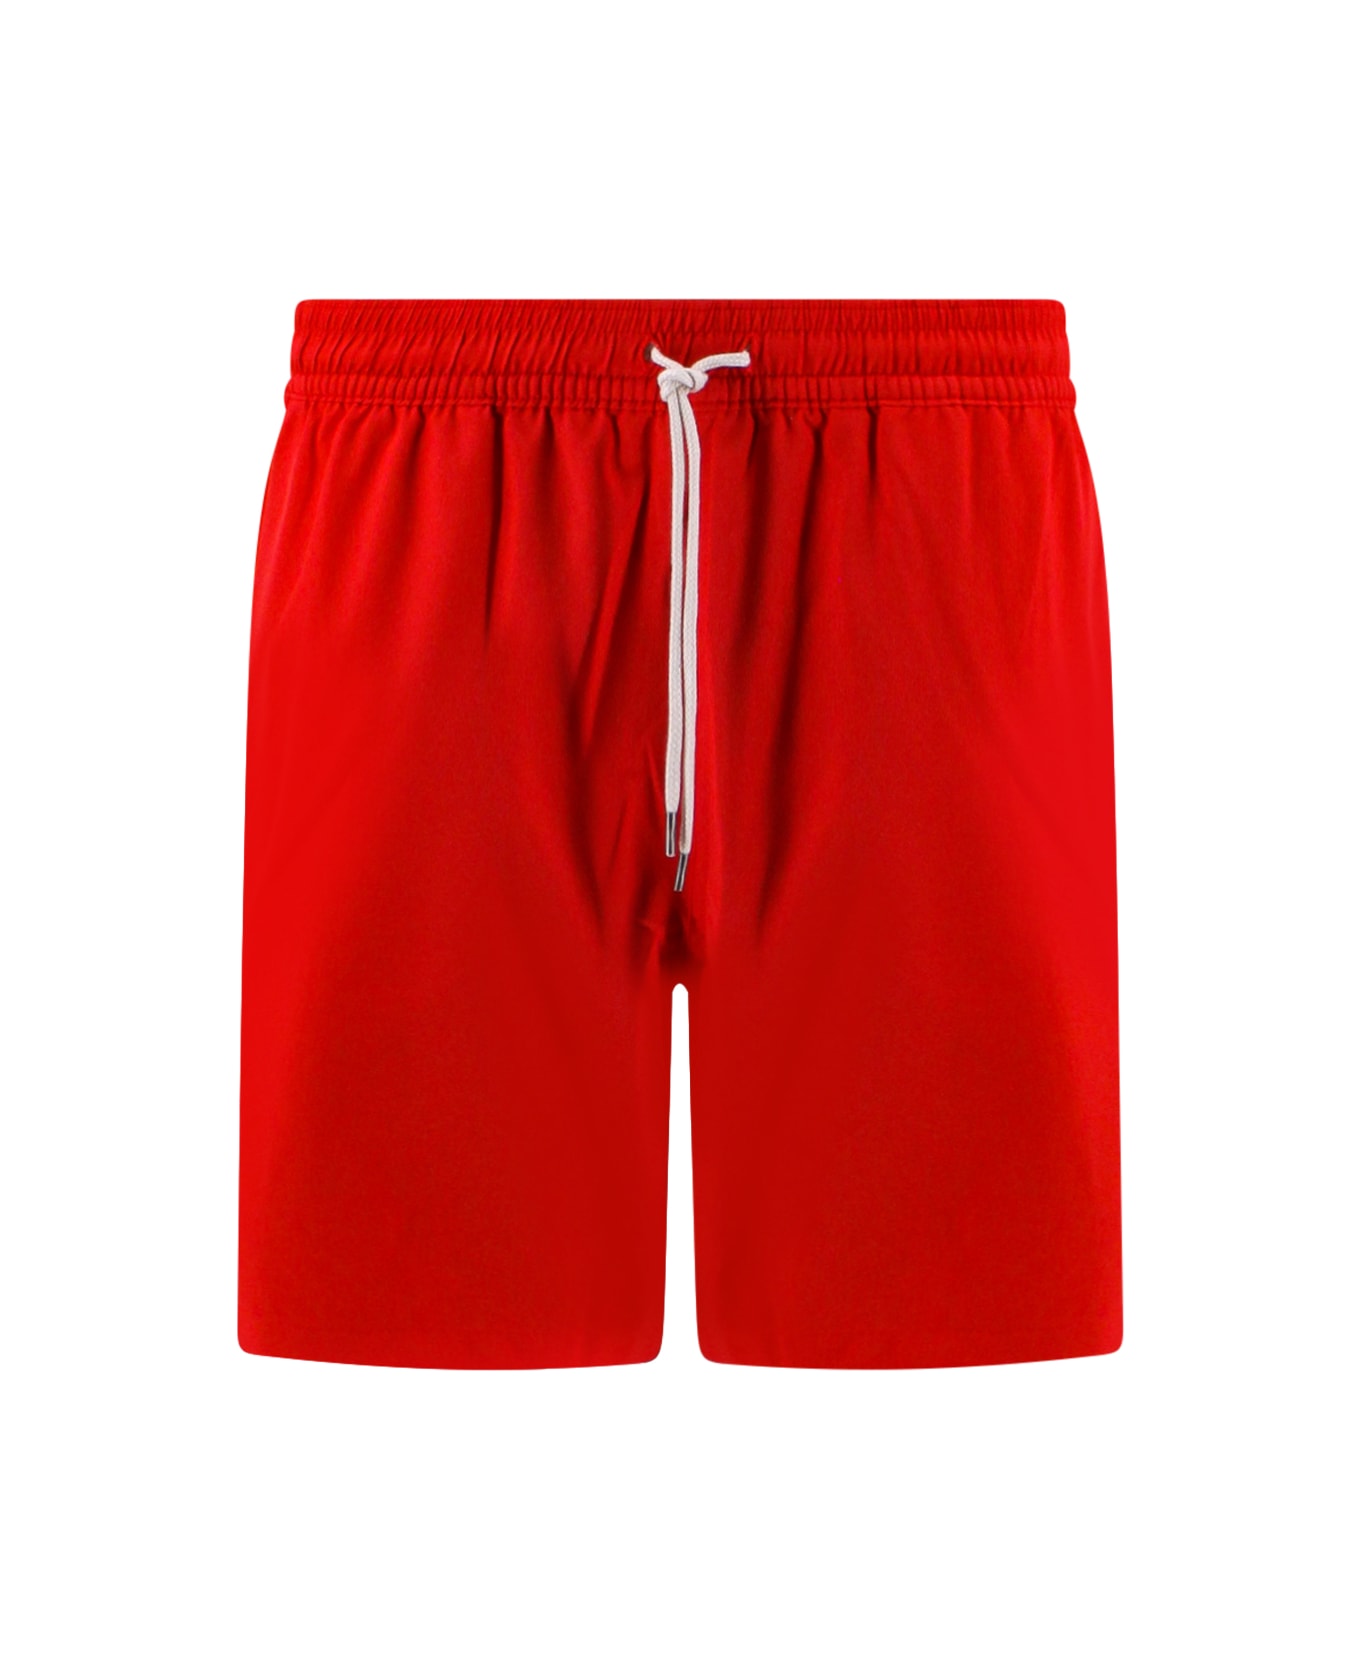 Polo Ralph Lauren Swim Trunks Swimwear - RED